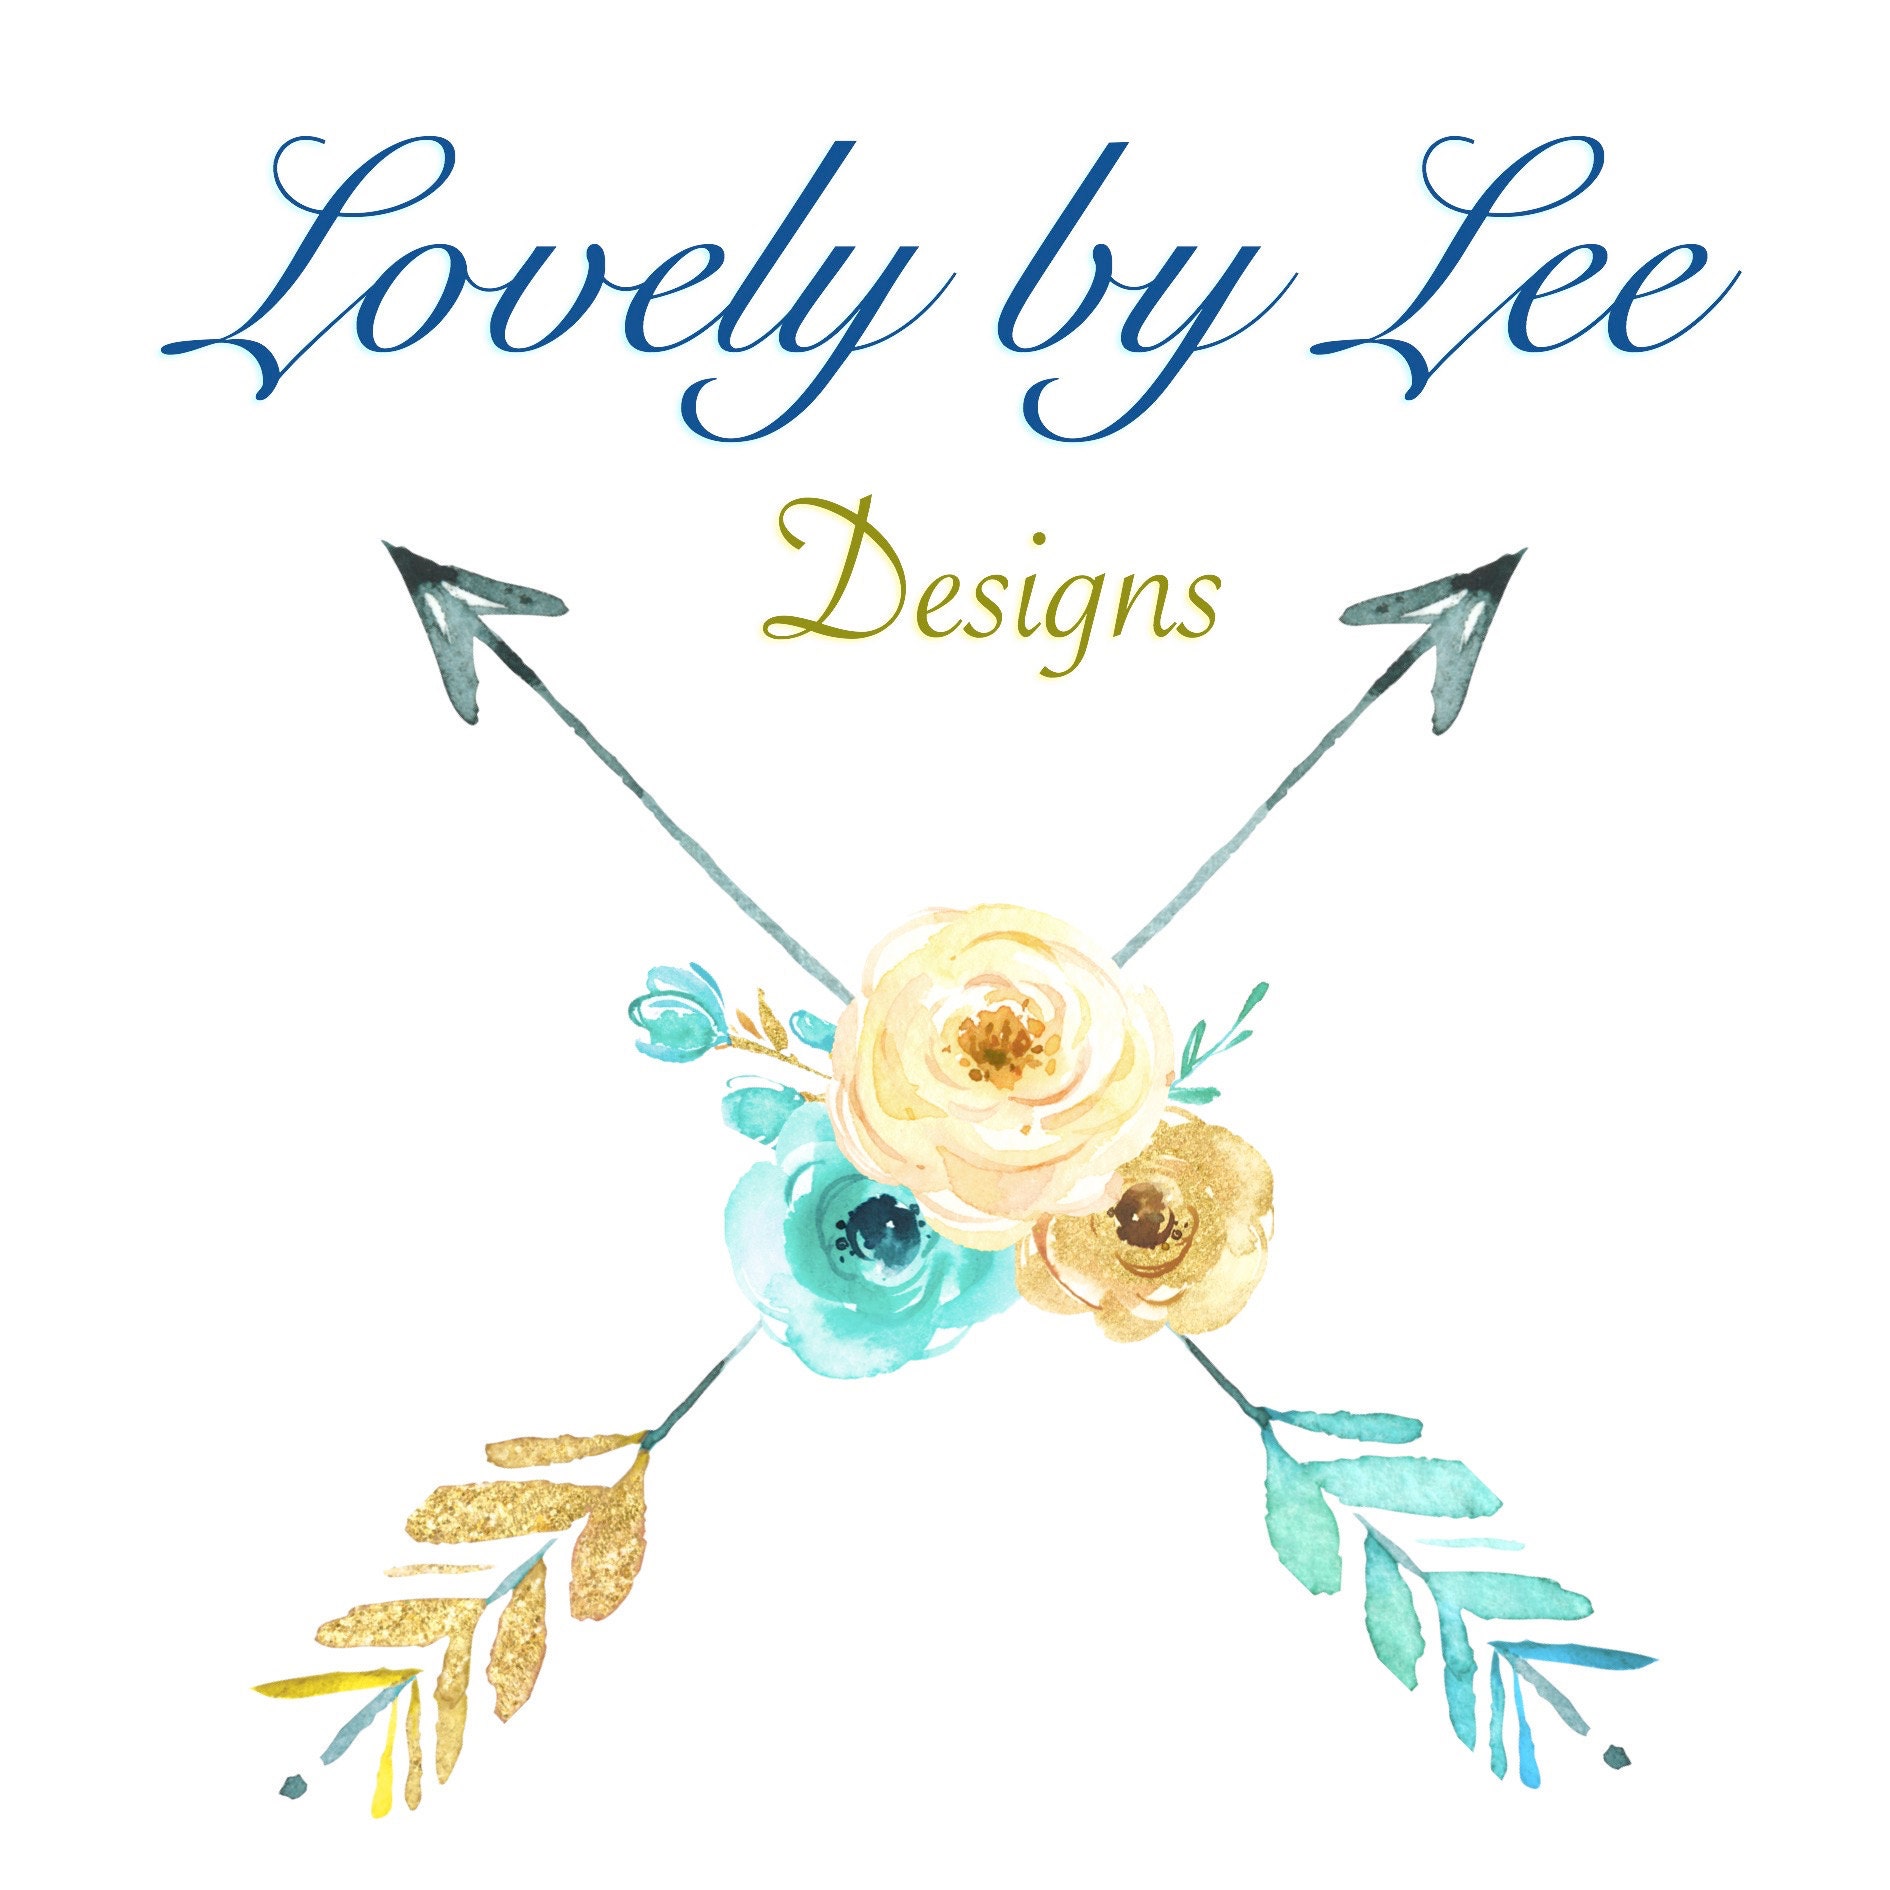 LovelybyLee - Handcrafted Boho Fashion & Patterns